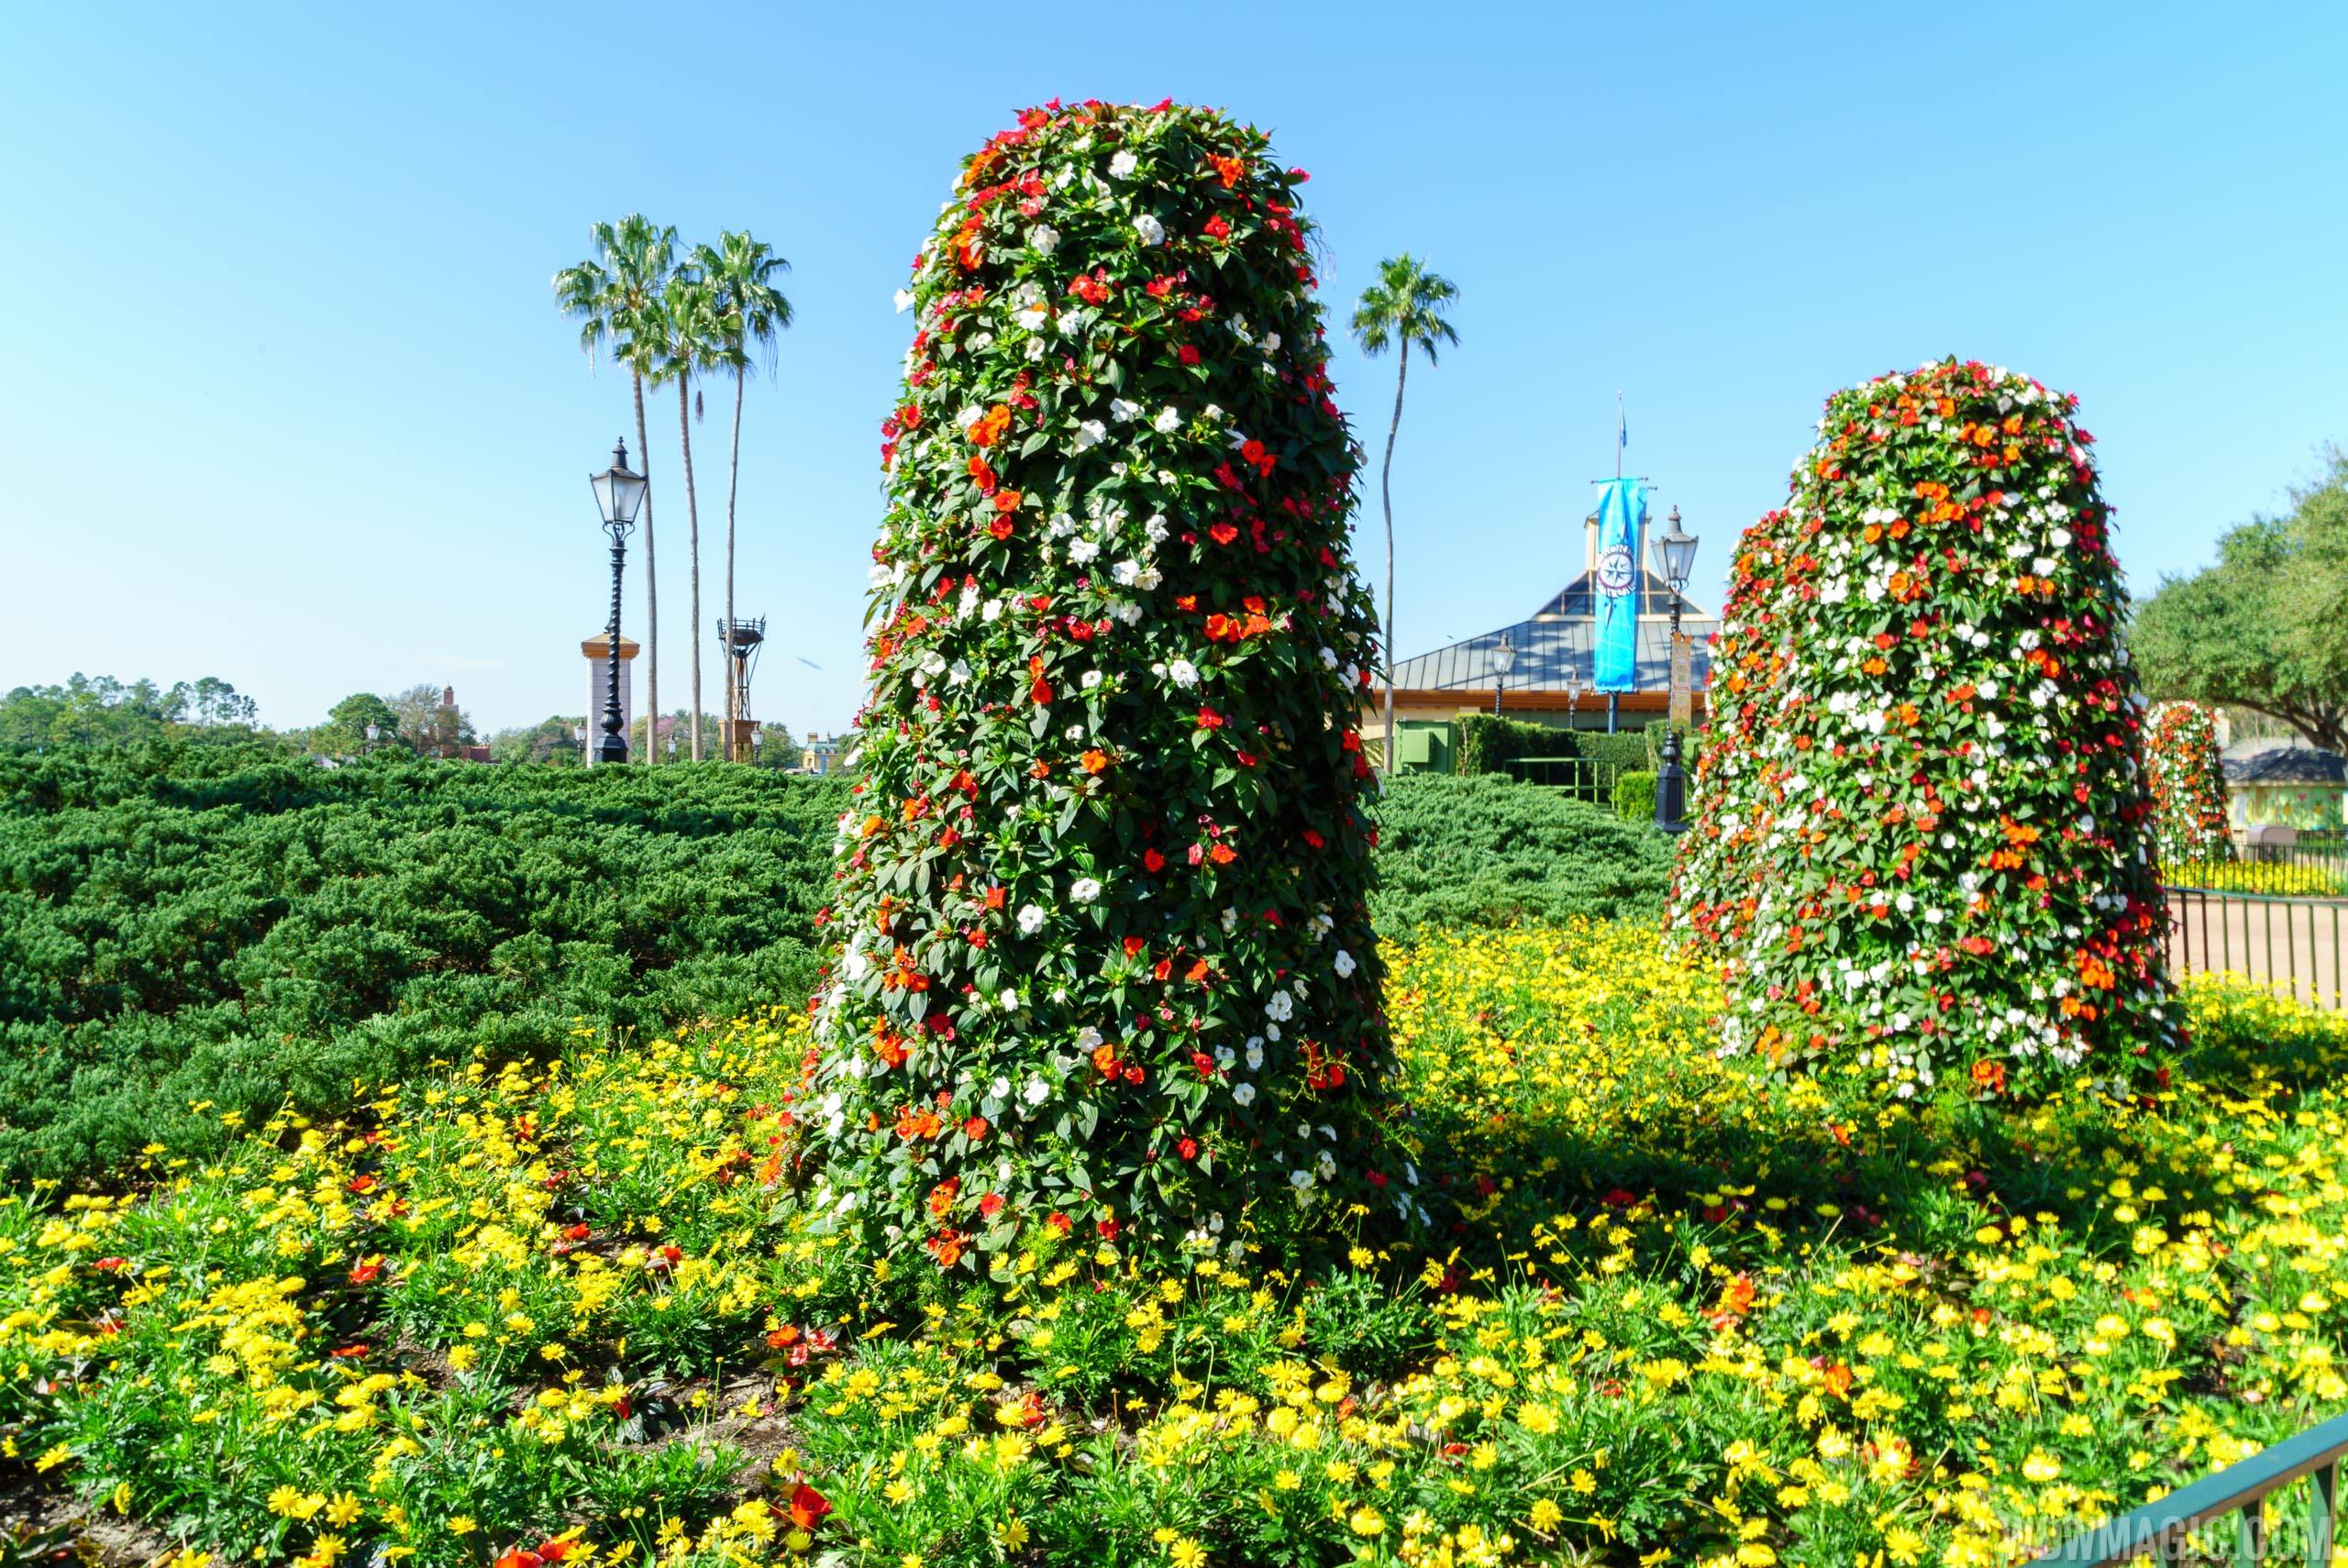 2016 Epcot International Flower and Garden Festival - Flower Tower in showcase plaza